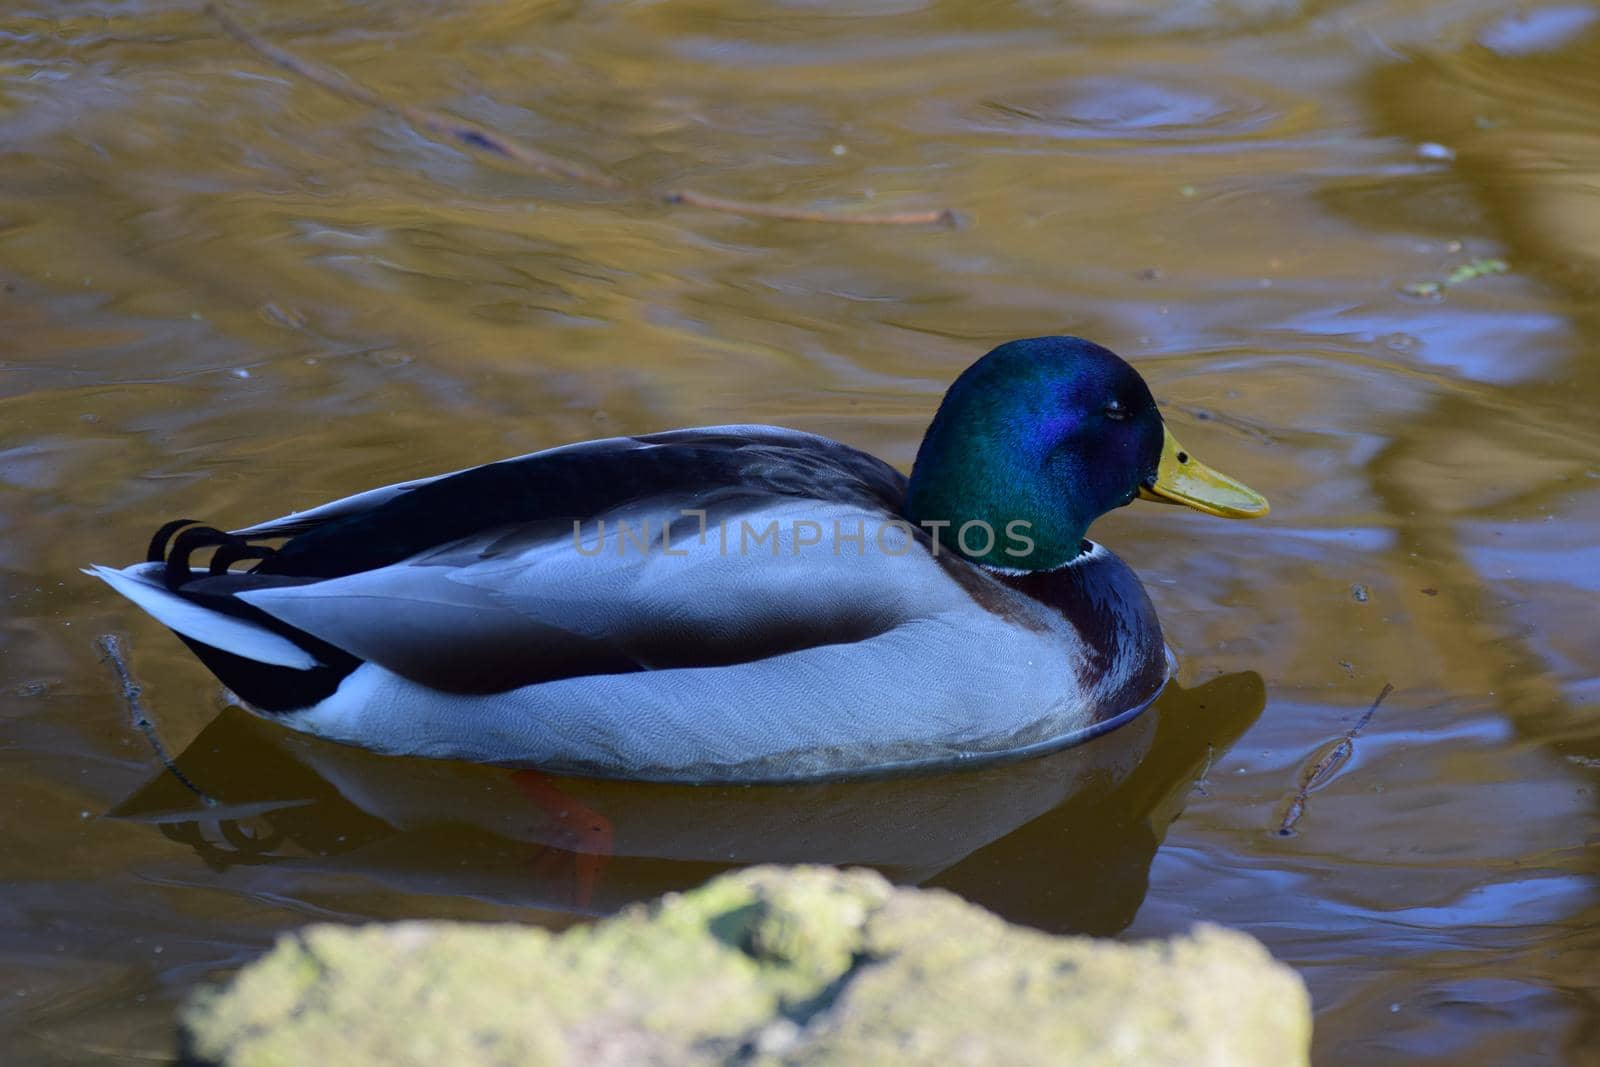 A male mallard duck swims on a lake by Luise123